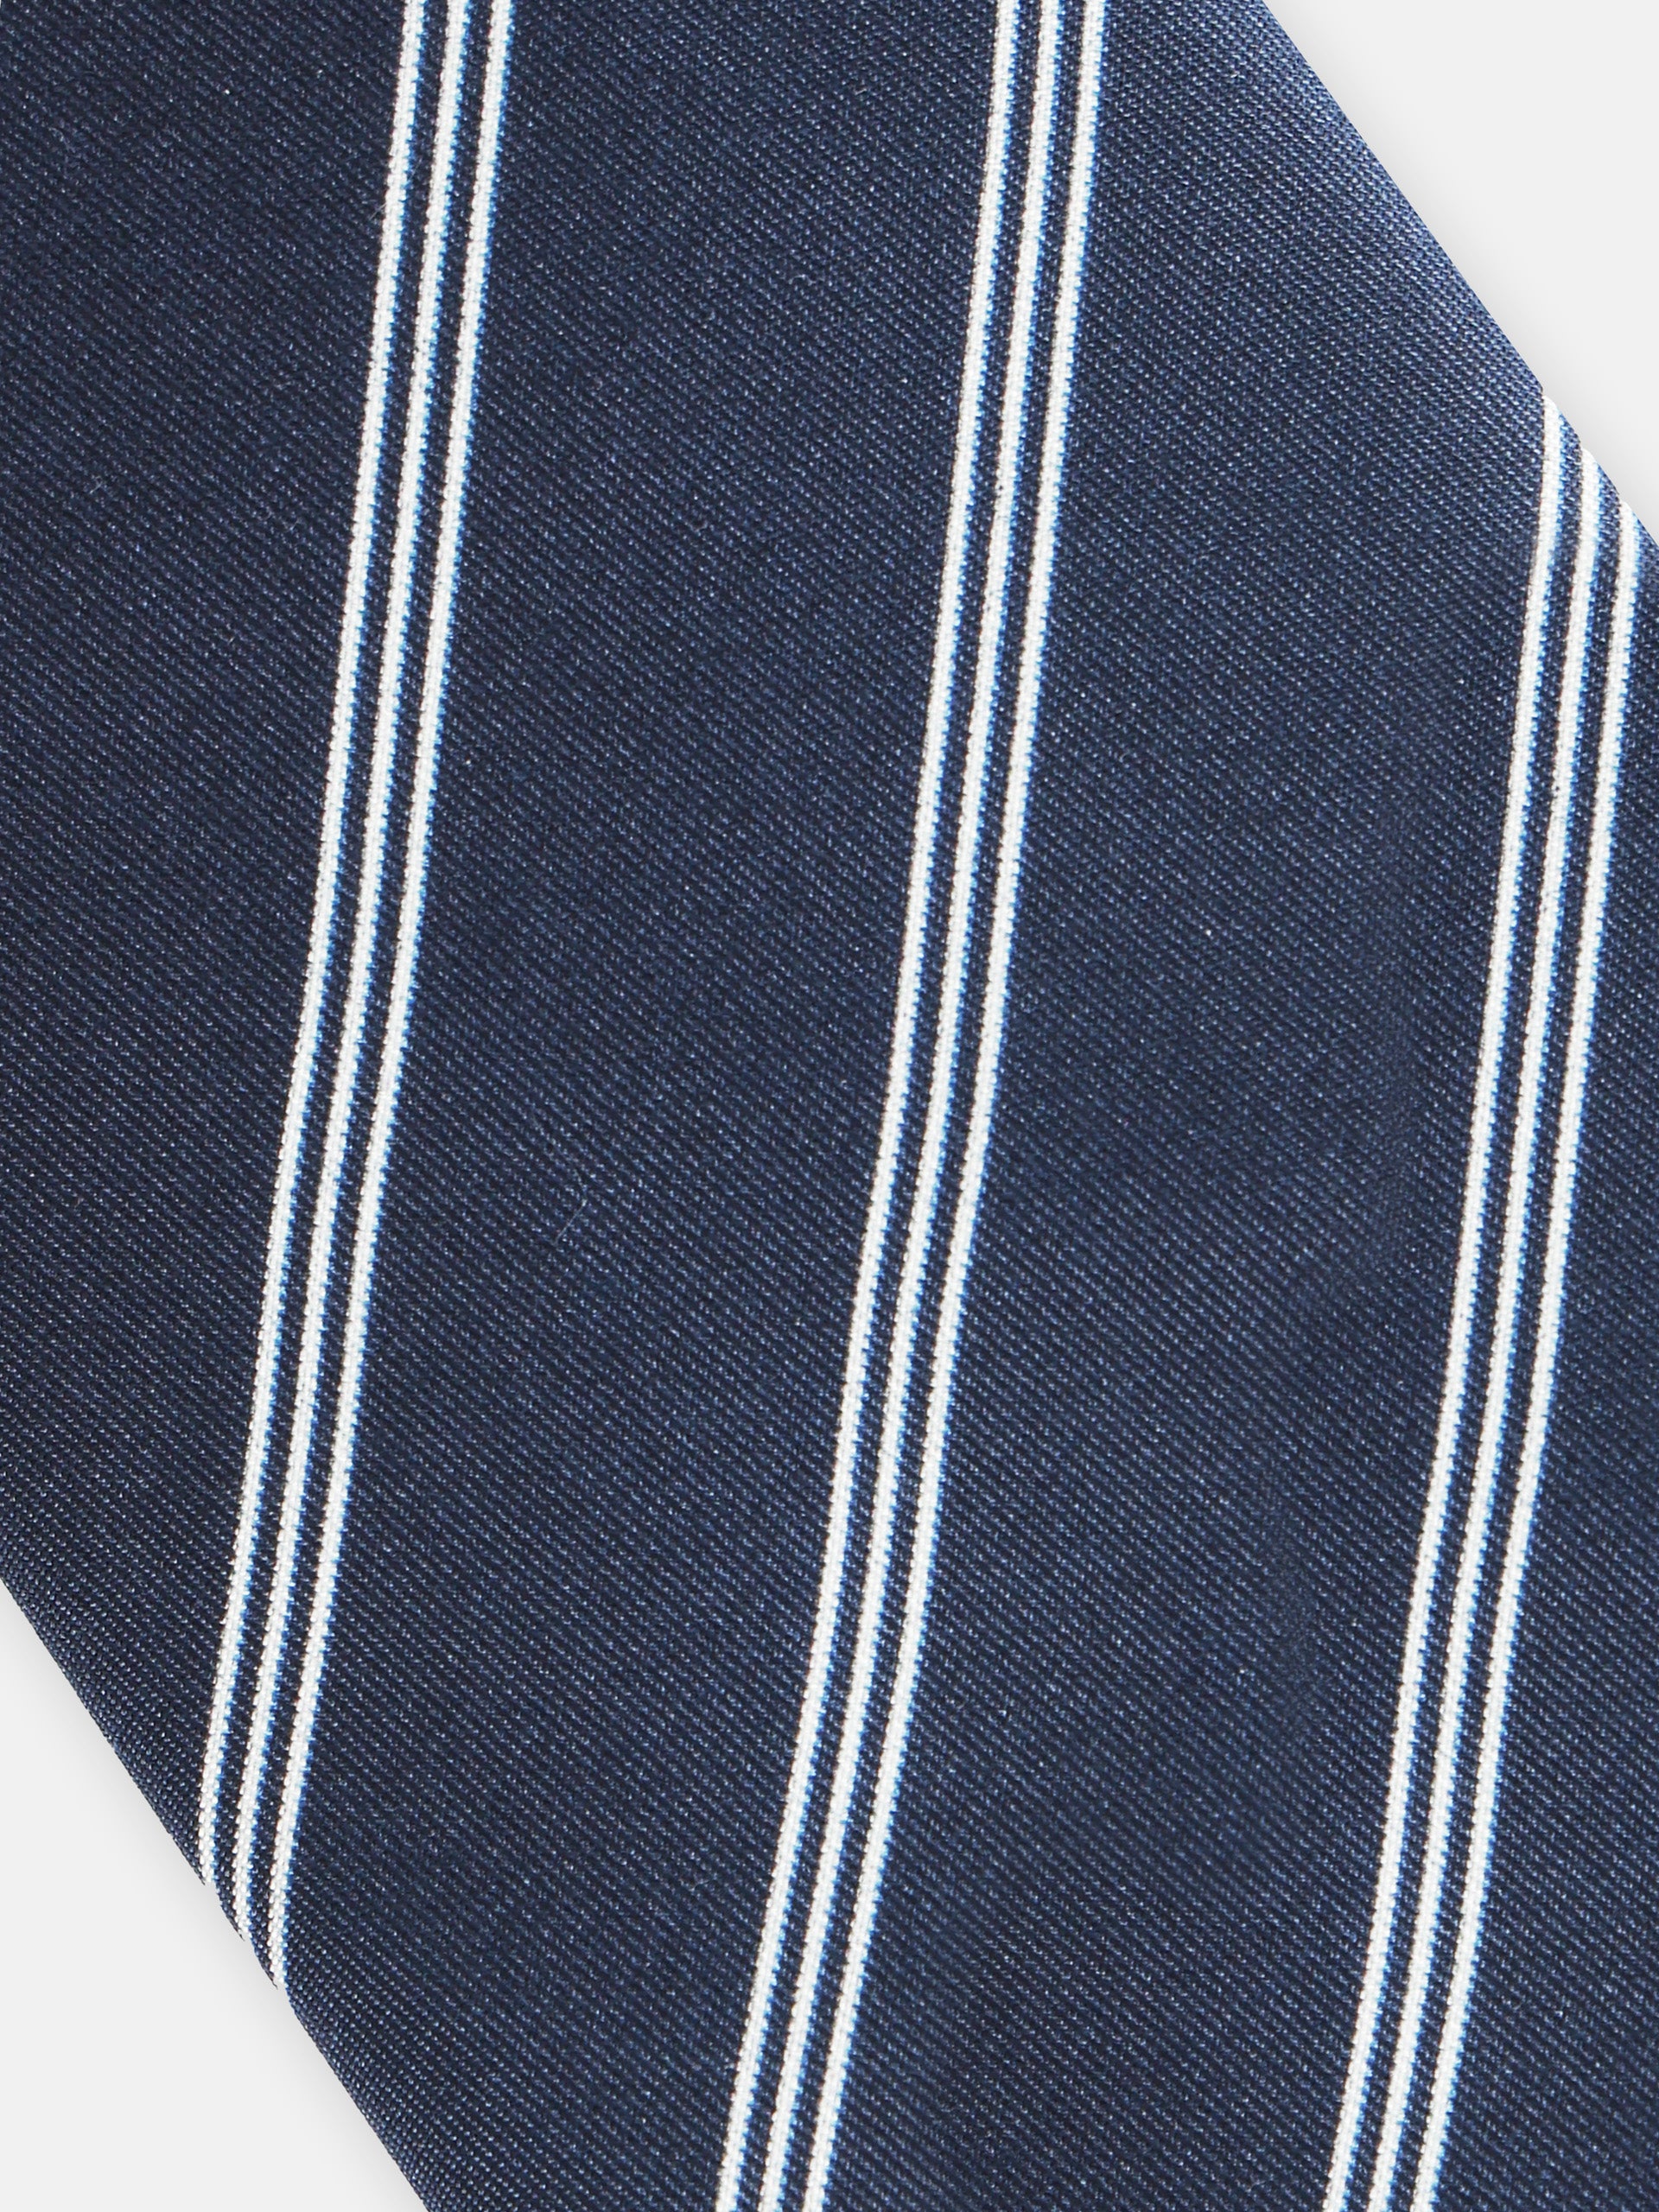 Corbata triple raya azul marino